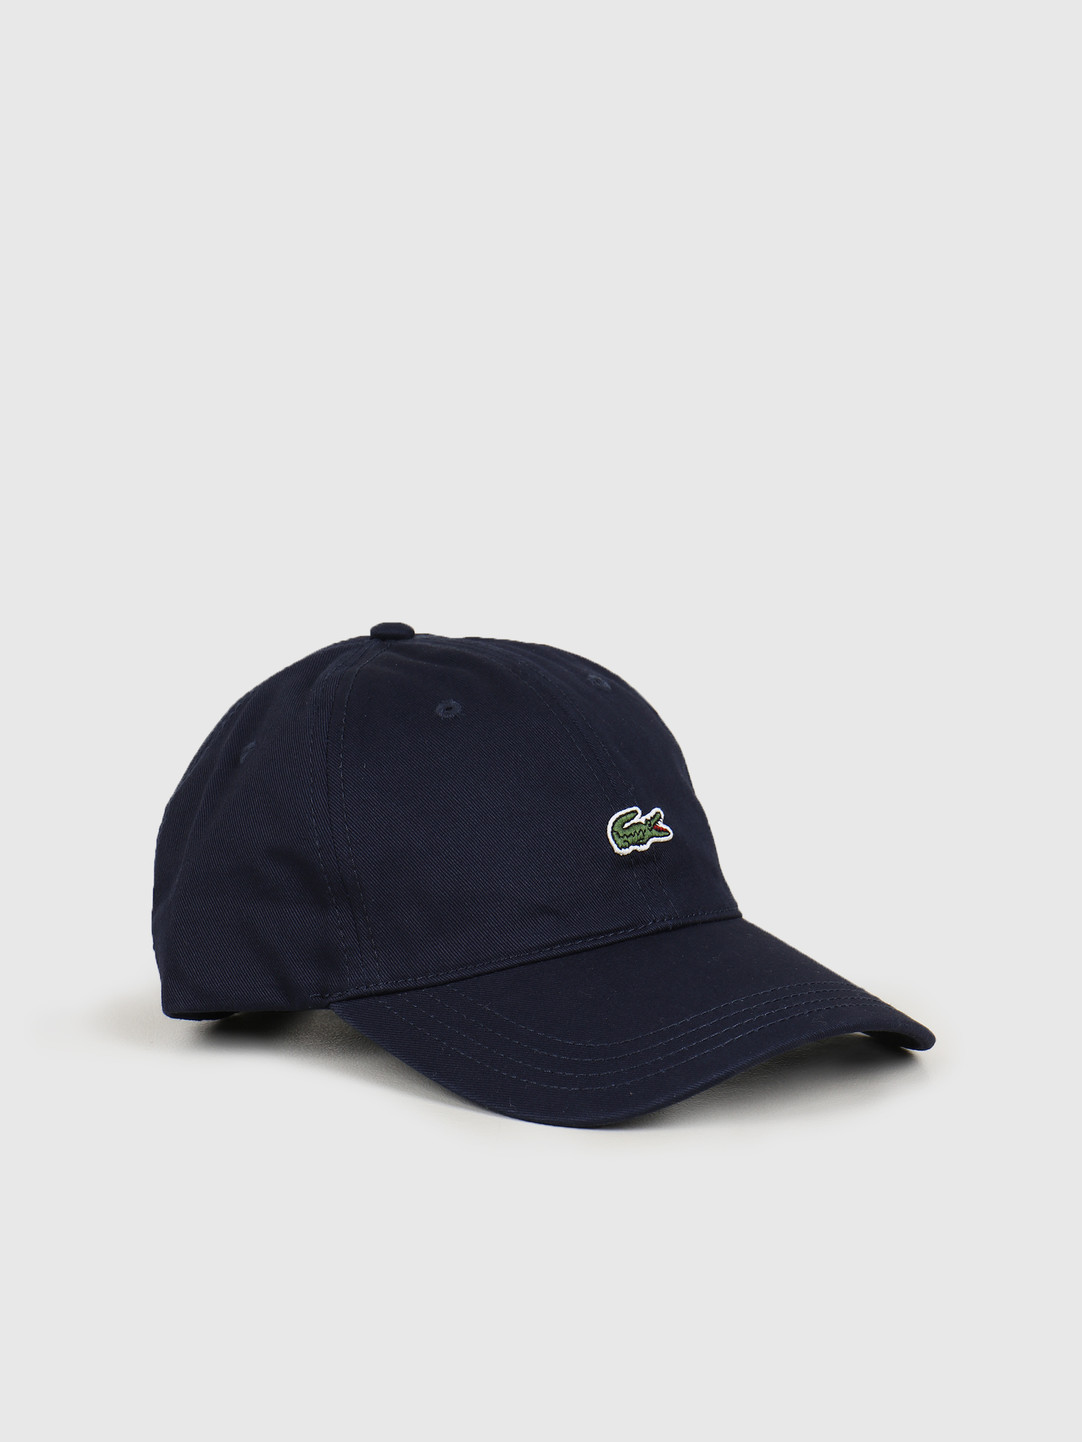 navy blue lacoste hat